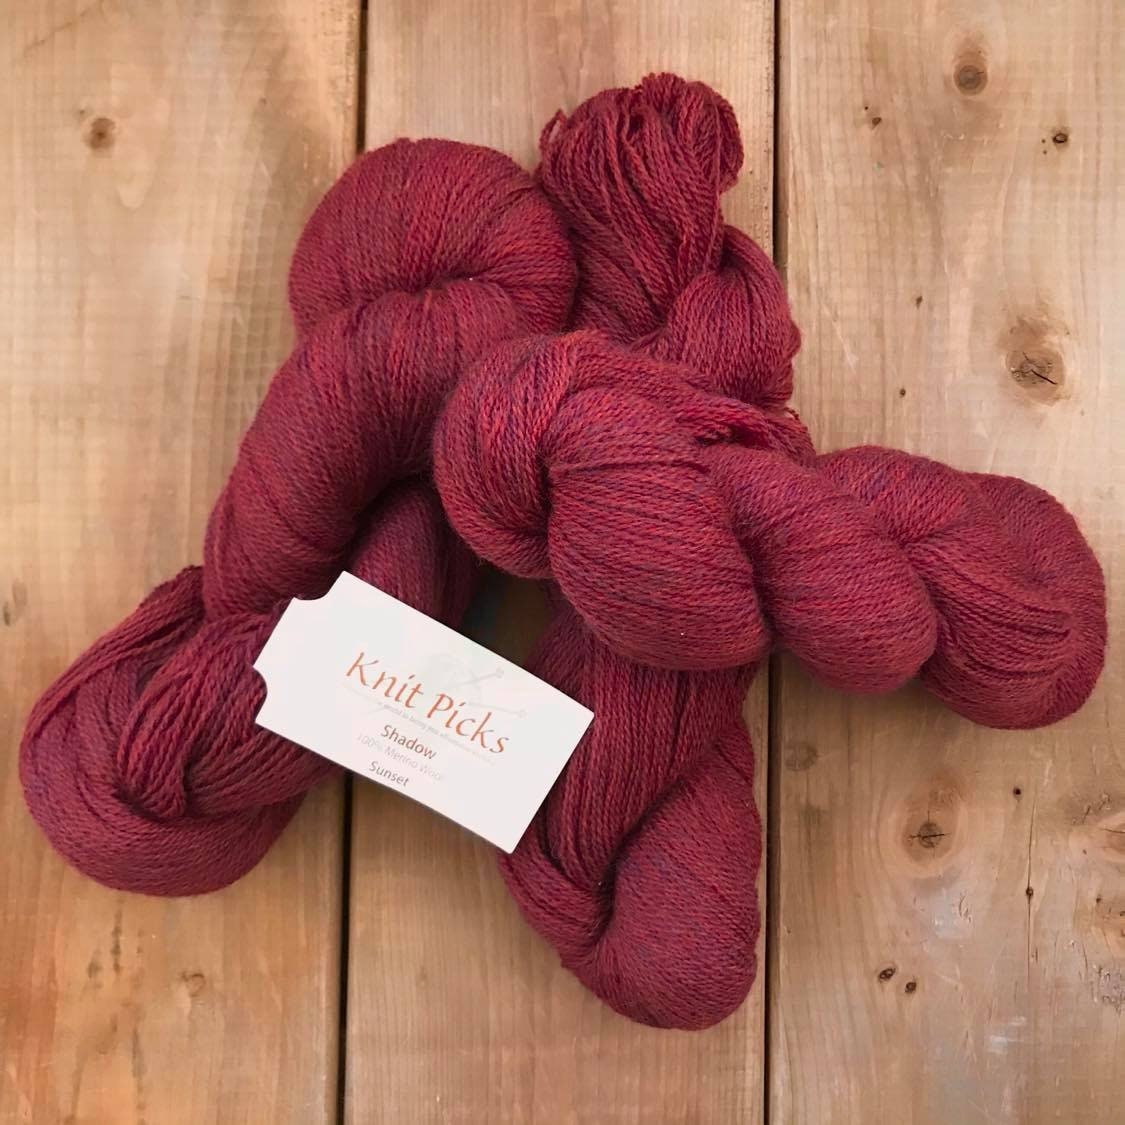 Merino Wool, Knit Picks 100% Merino Wool, Lace Weight Wool 